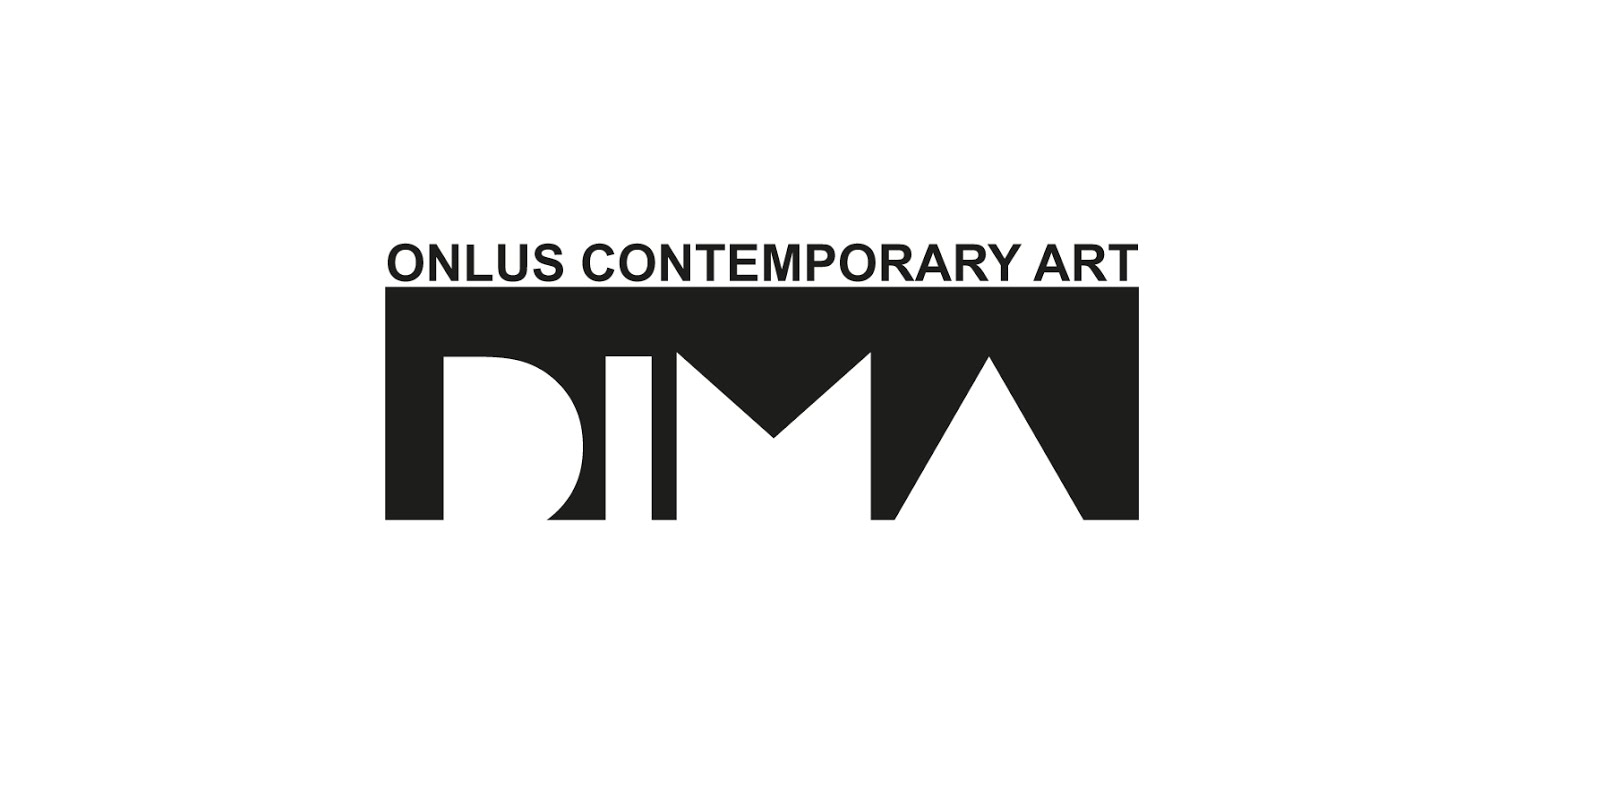 DIMA Contemporary Art - Onlus